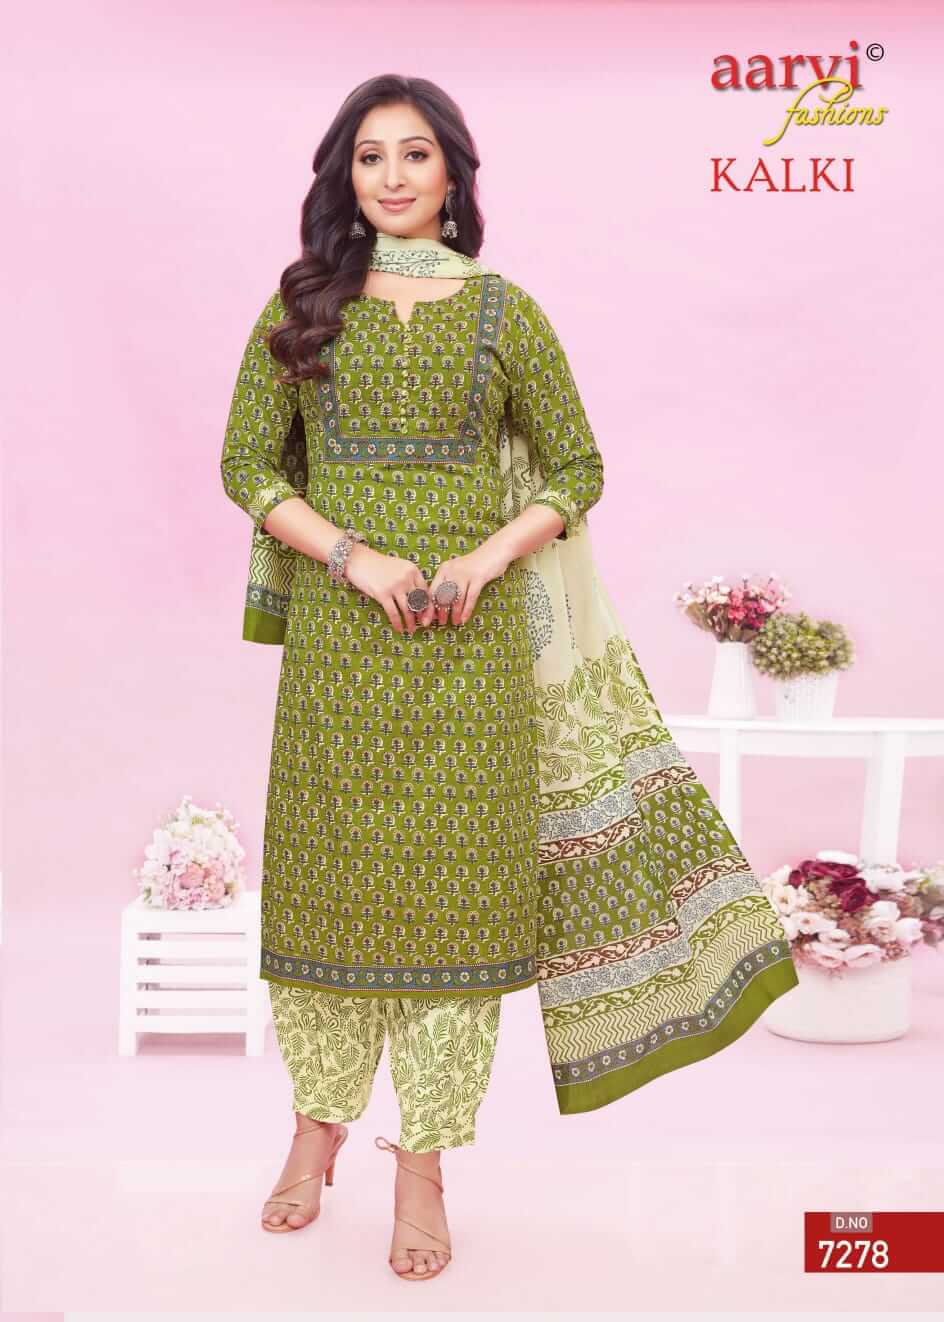 Aarvi Fashion Kalki vol 2 Cotton Salwar Kameez collection 7